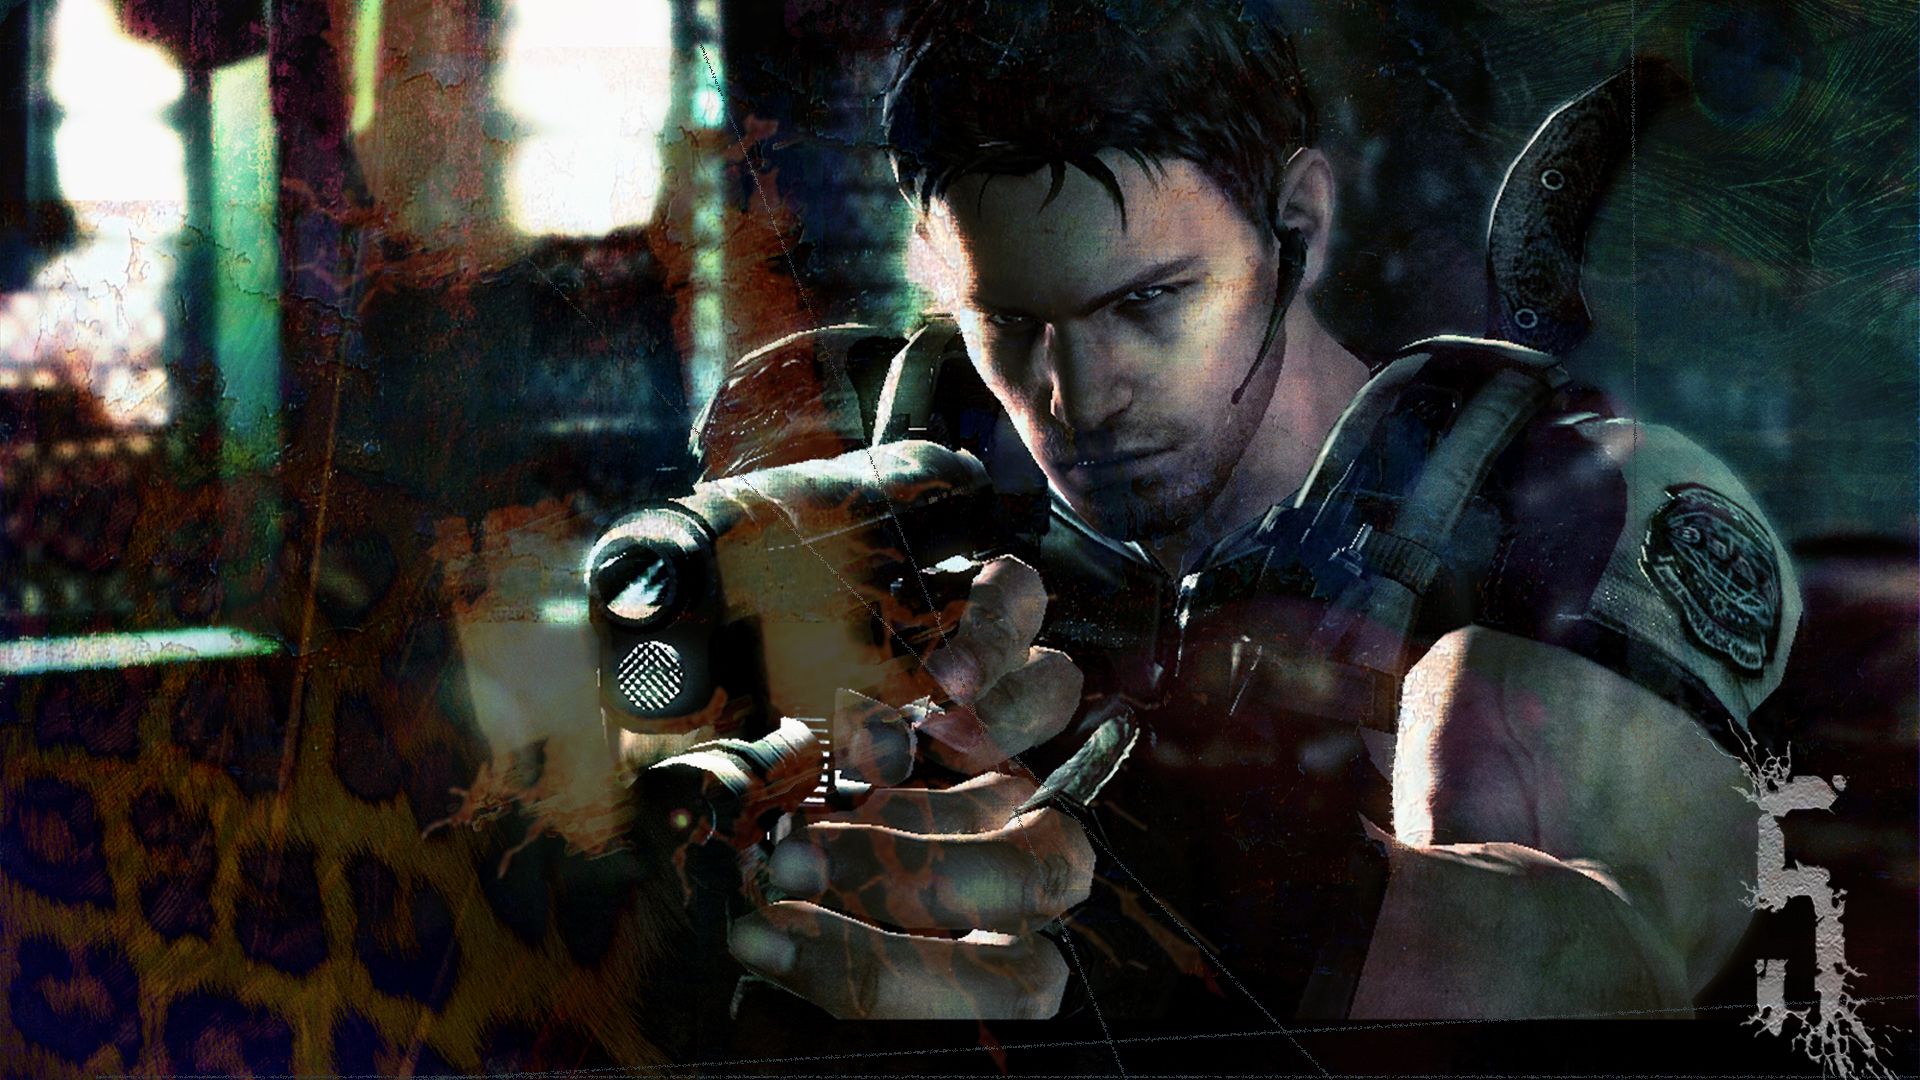 Berserker - Tear Through the Game: Resident Evil 5 Wallpapers